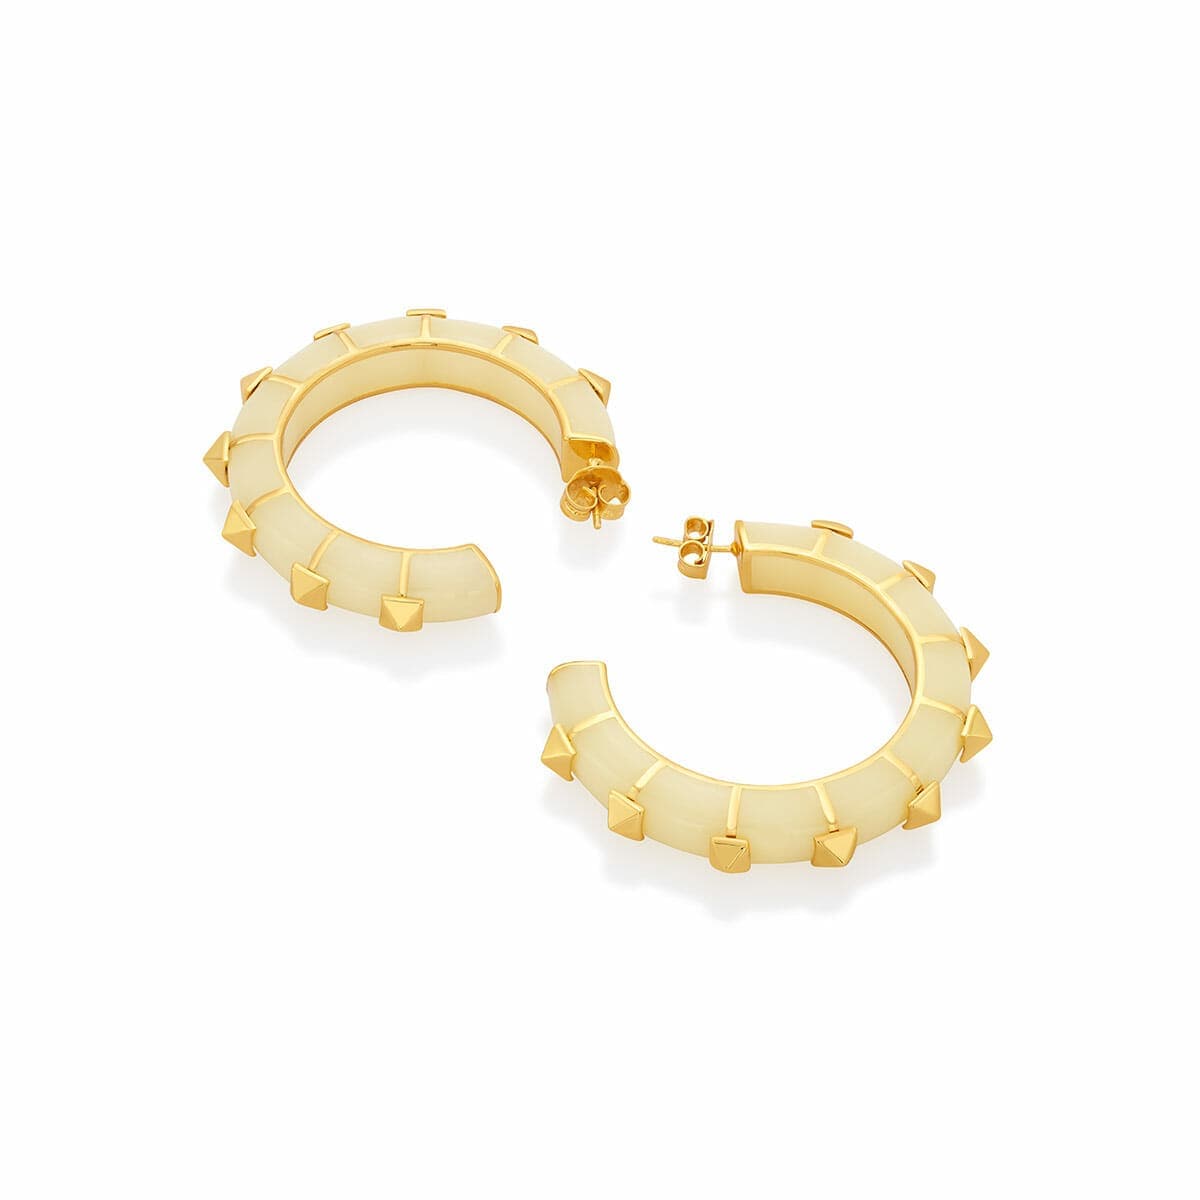 White, resin earrings. Only in gold and big frames. #smallbusiness  #resinjewelry #earrings | Instagram